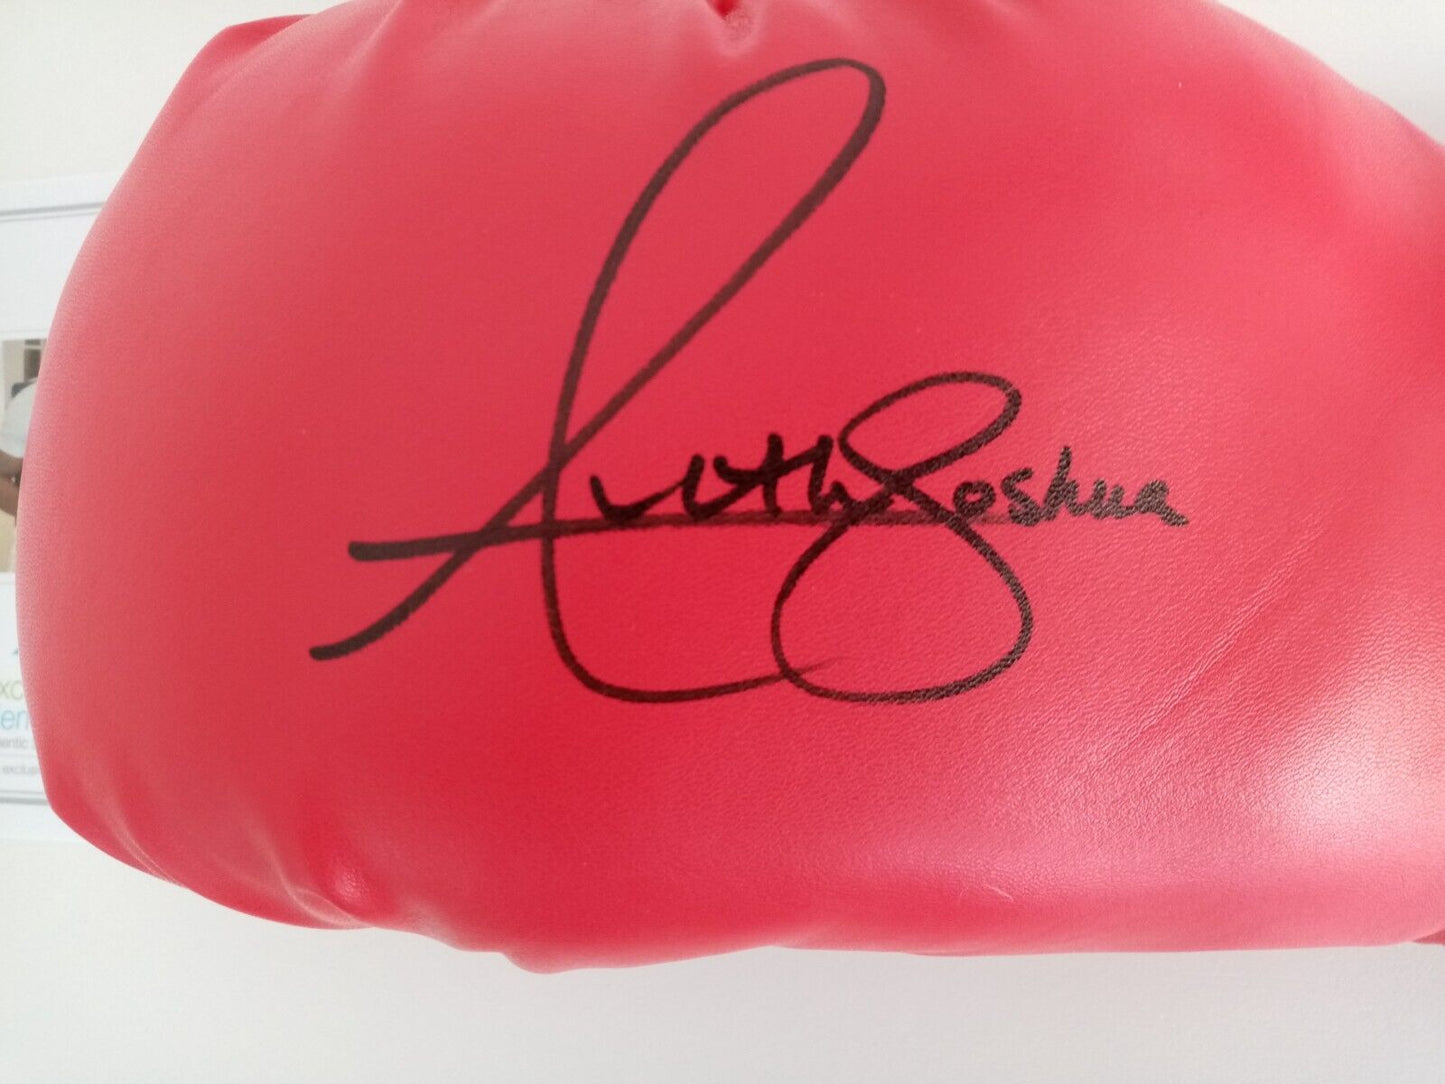 Boxhandschuh Anthony Joshua signiert Autogramm Everlast Autogramm Boxen UK COA